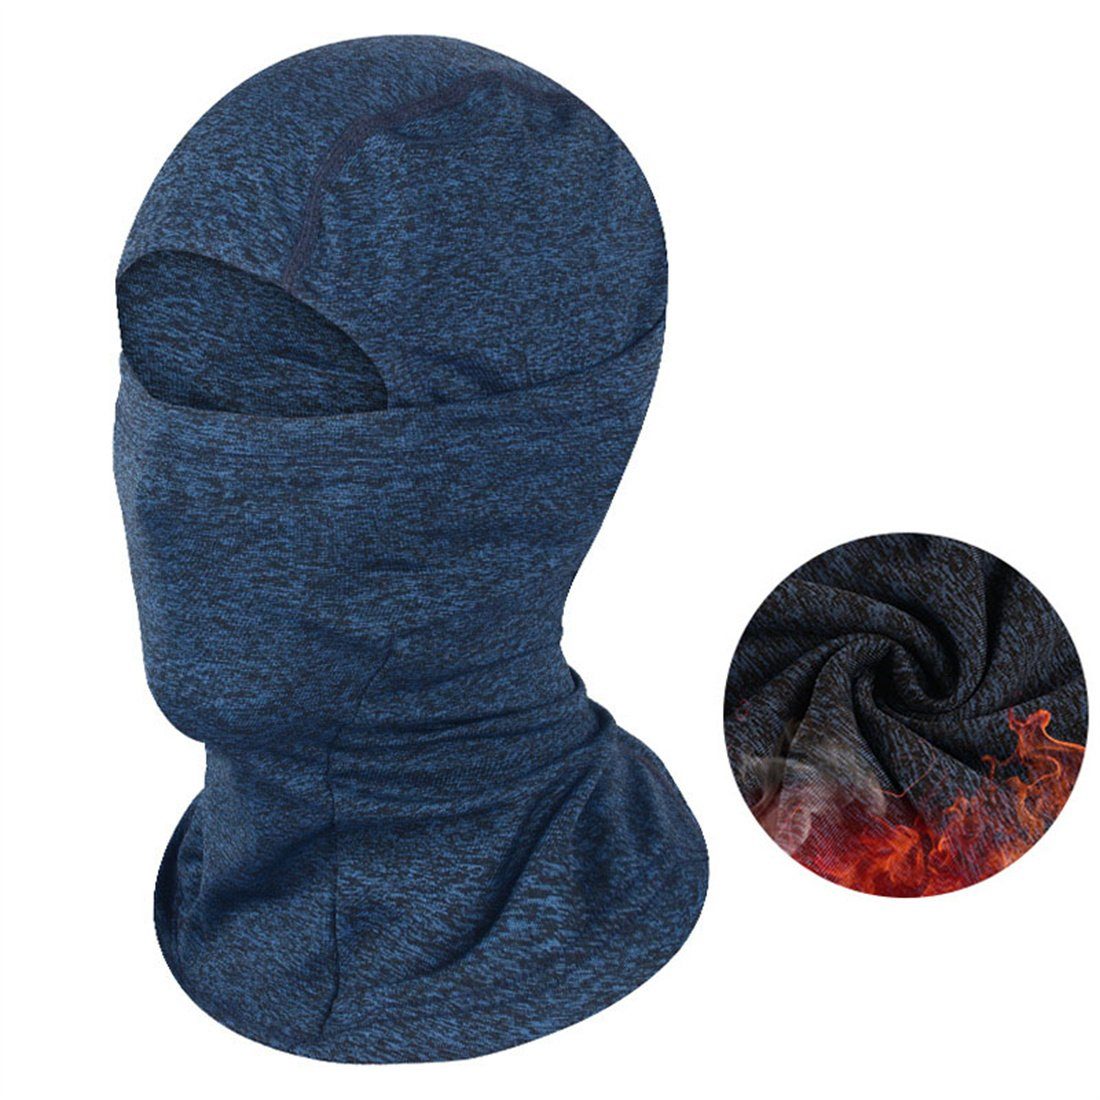 DÖRÖY Sturmhaube Winter Outdoor Kälteschutz Warm Ski Kopfbedeckung, Reiten Masken blau | Sturmhauben